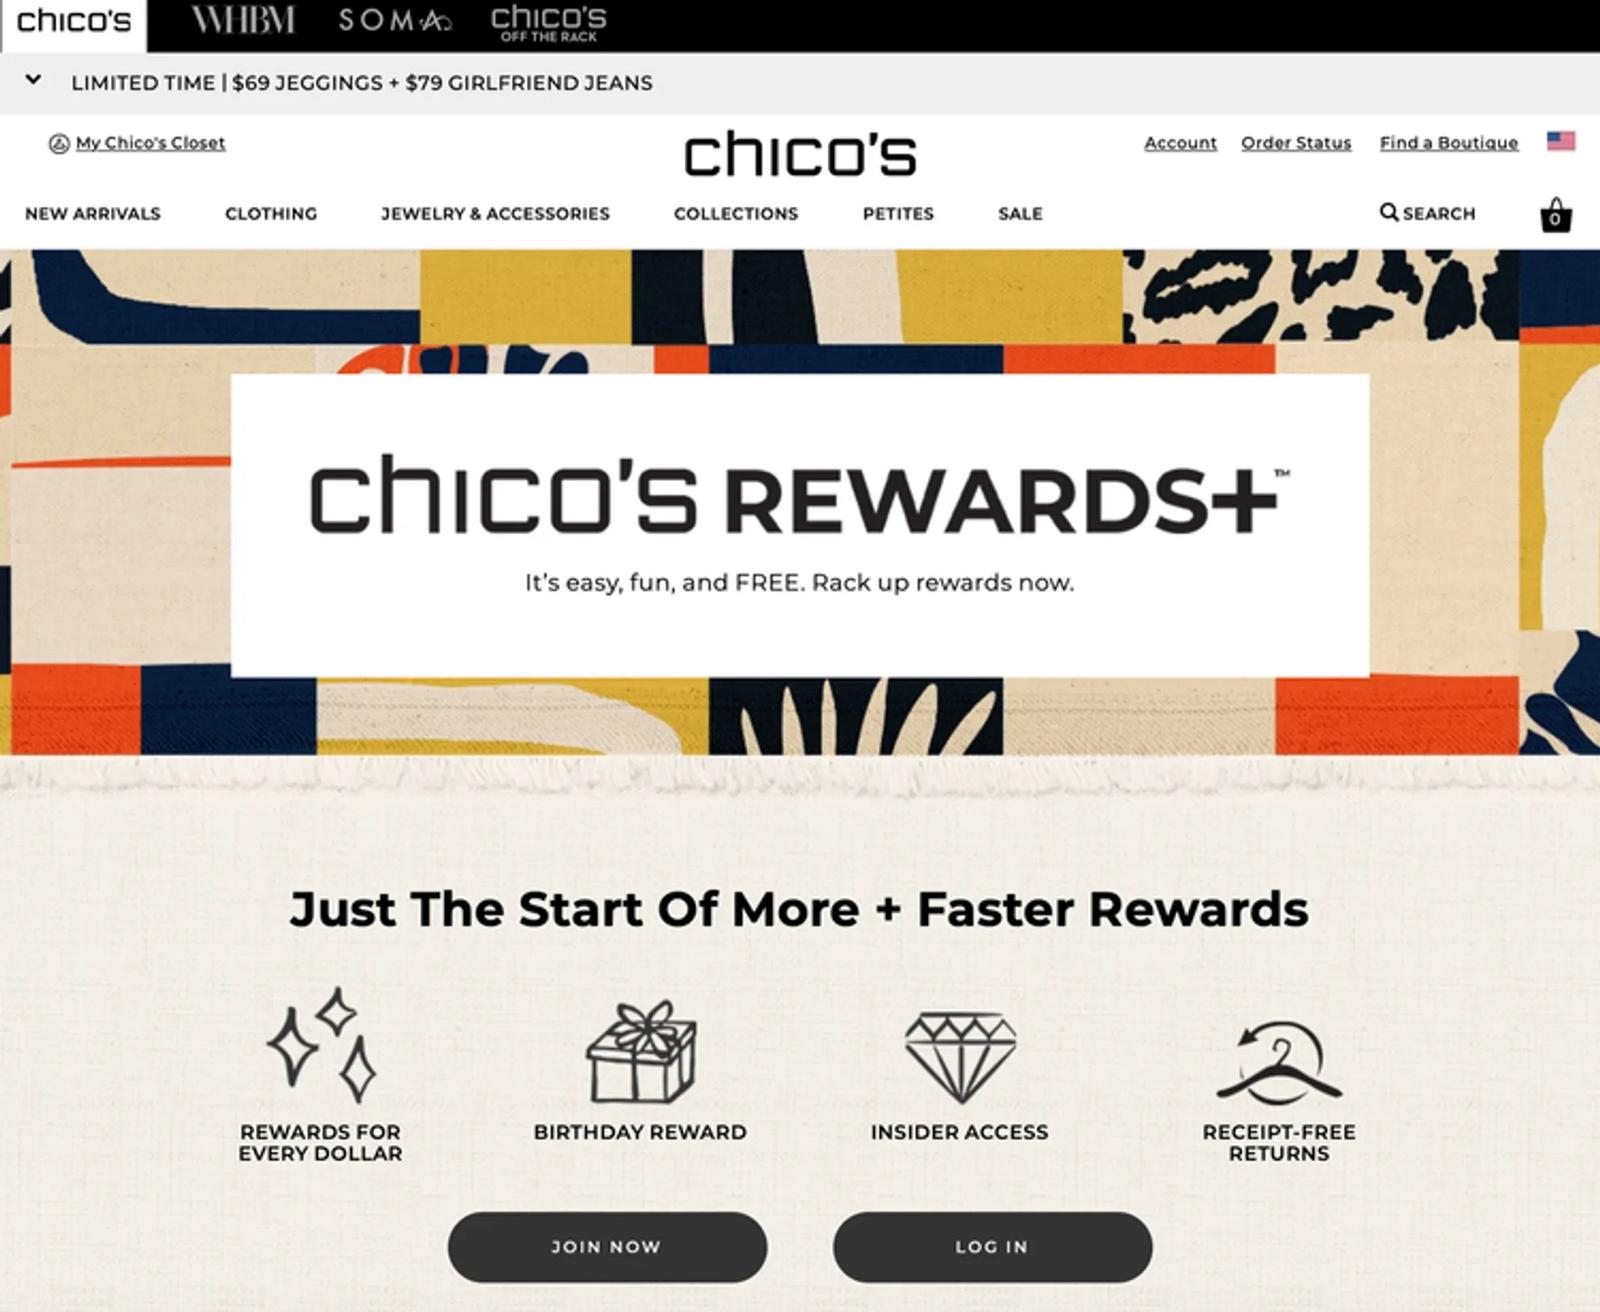 Chicos/WHBM/Soma's Loyalty Program Redesign